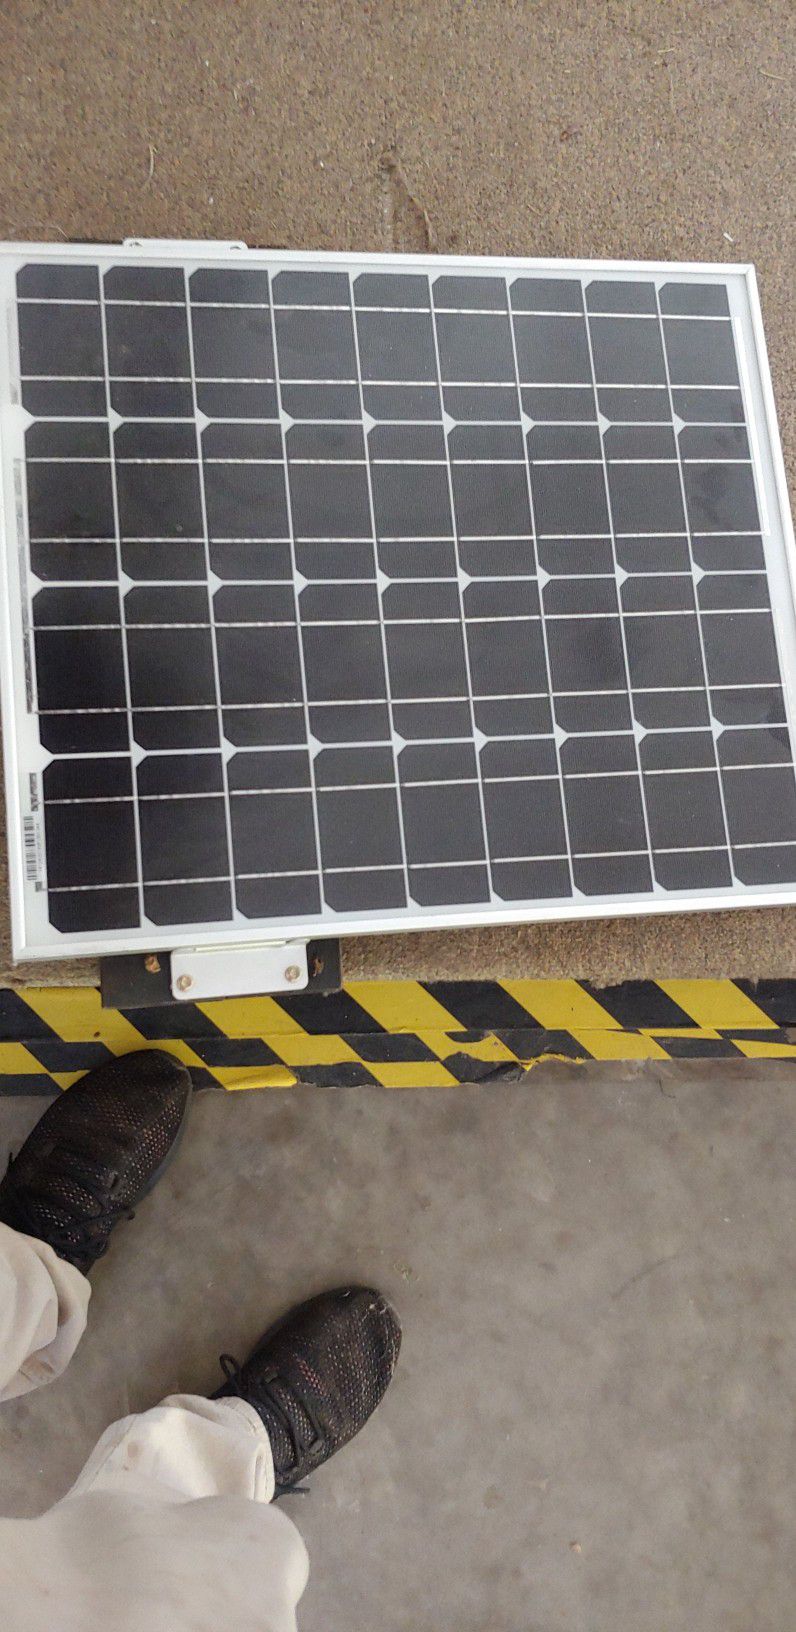 2 Solar Panels